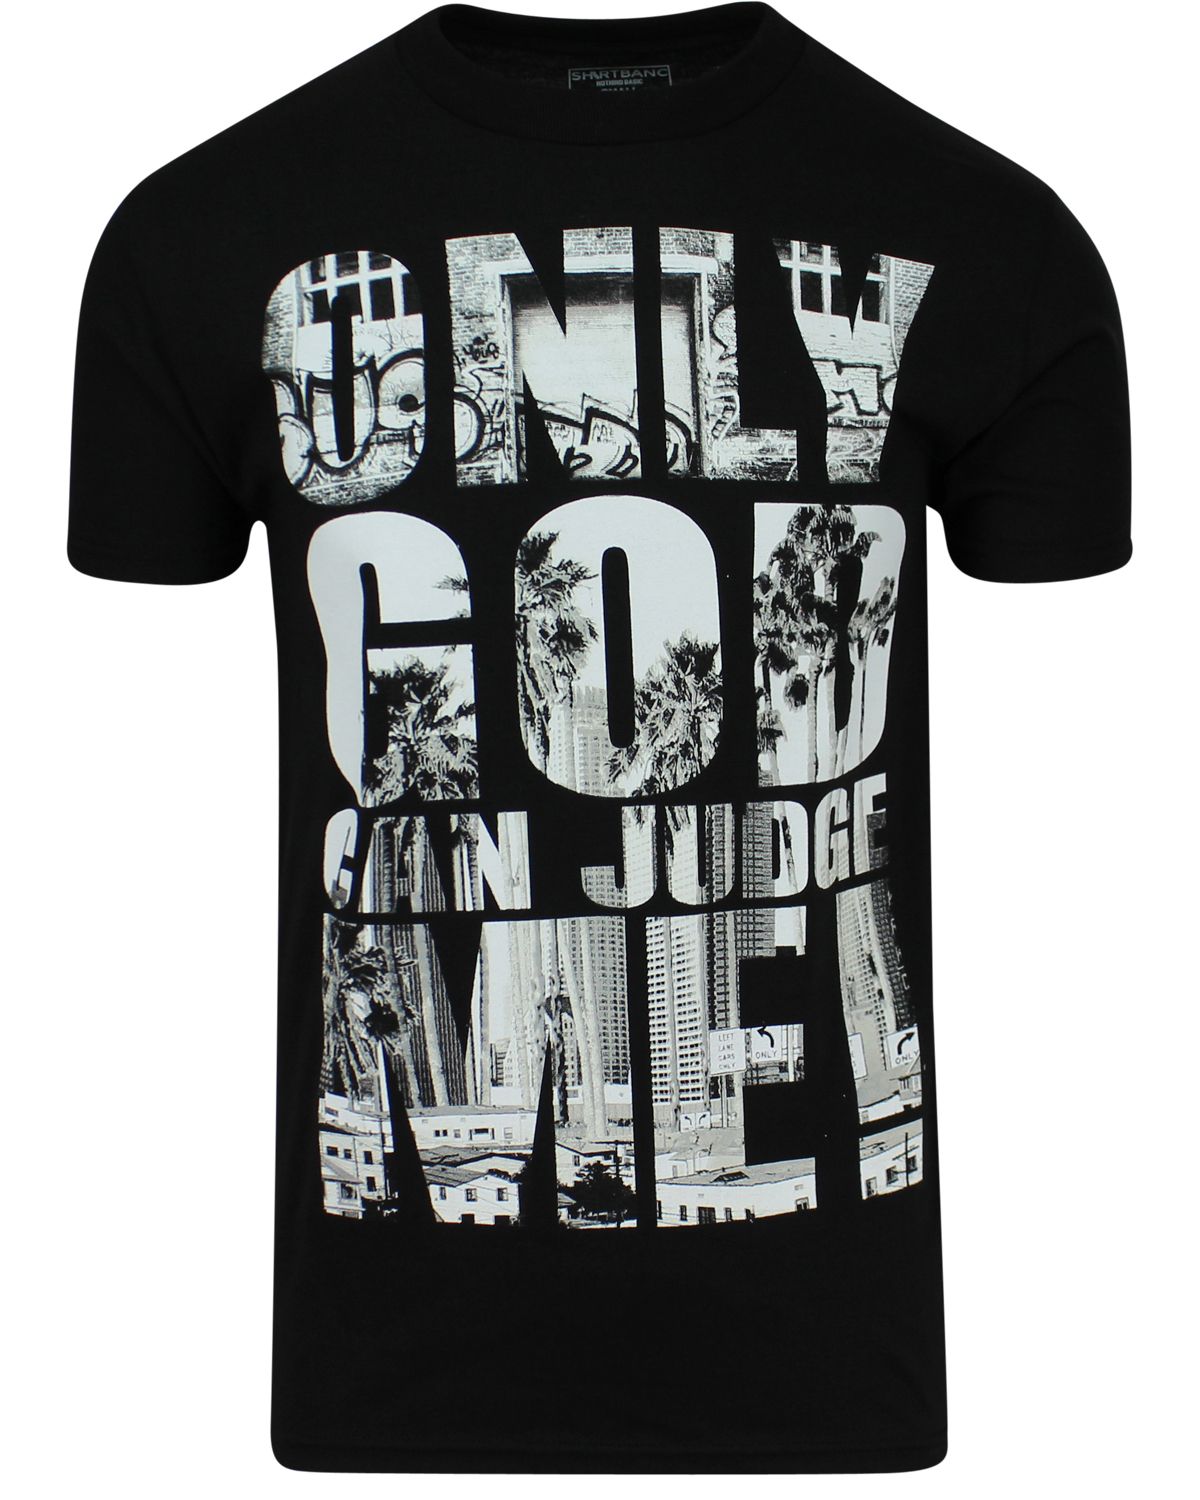 ShirtBANC Brand Only God Can Judge Me Mens Shirt Hip Hop Inspired Apparel - image 1 of 3